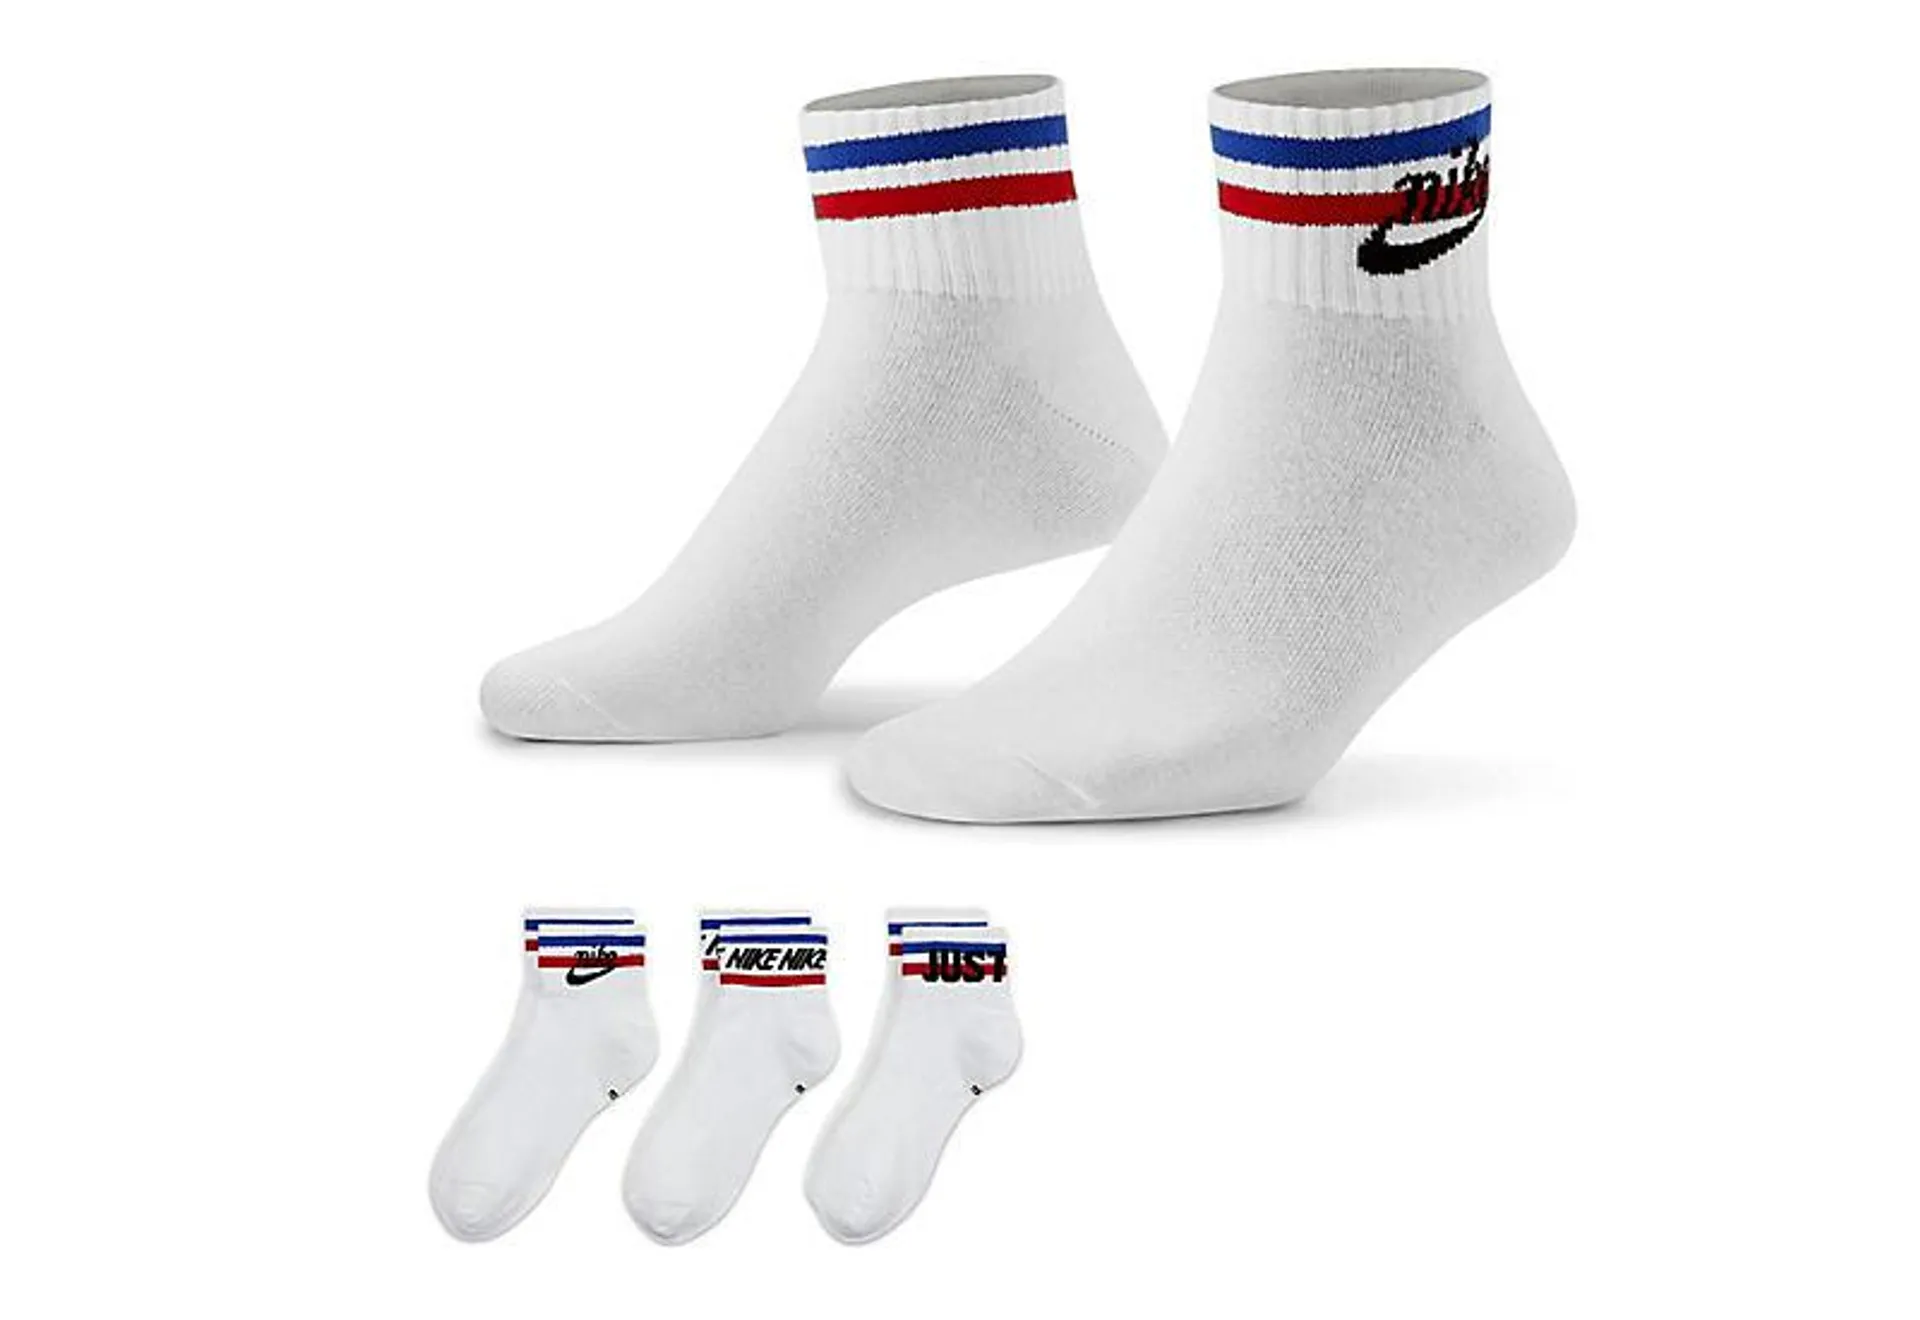 Nike Mens Graphic Quarter Socks 3 Pairs - White